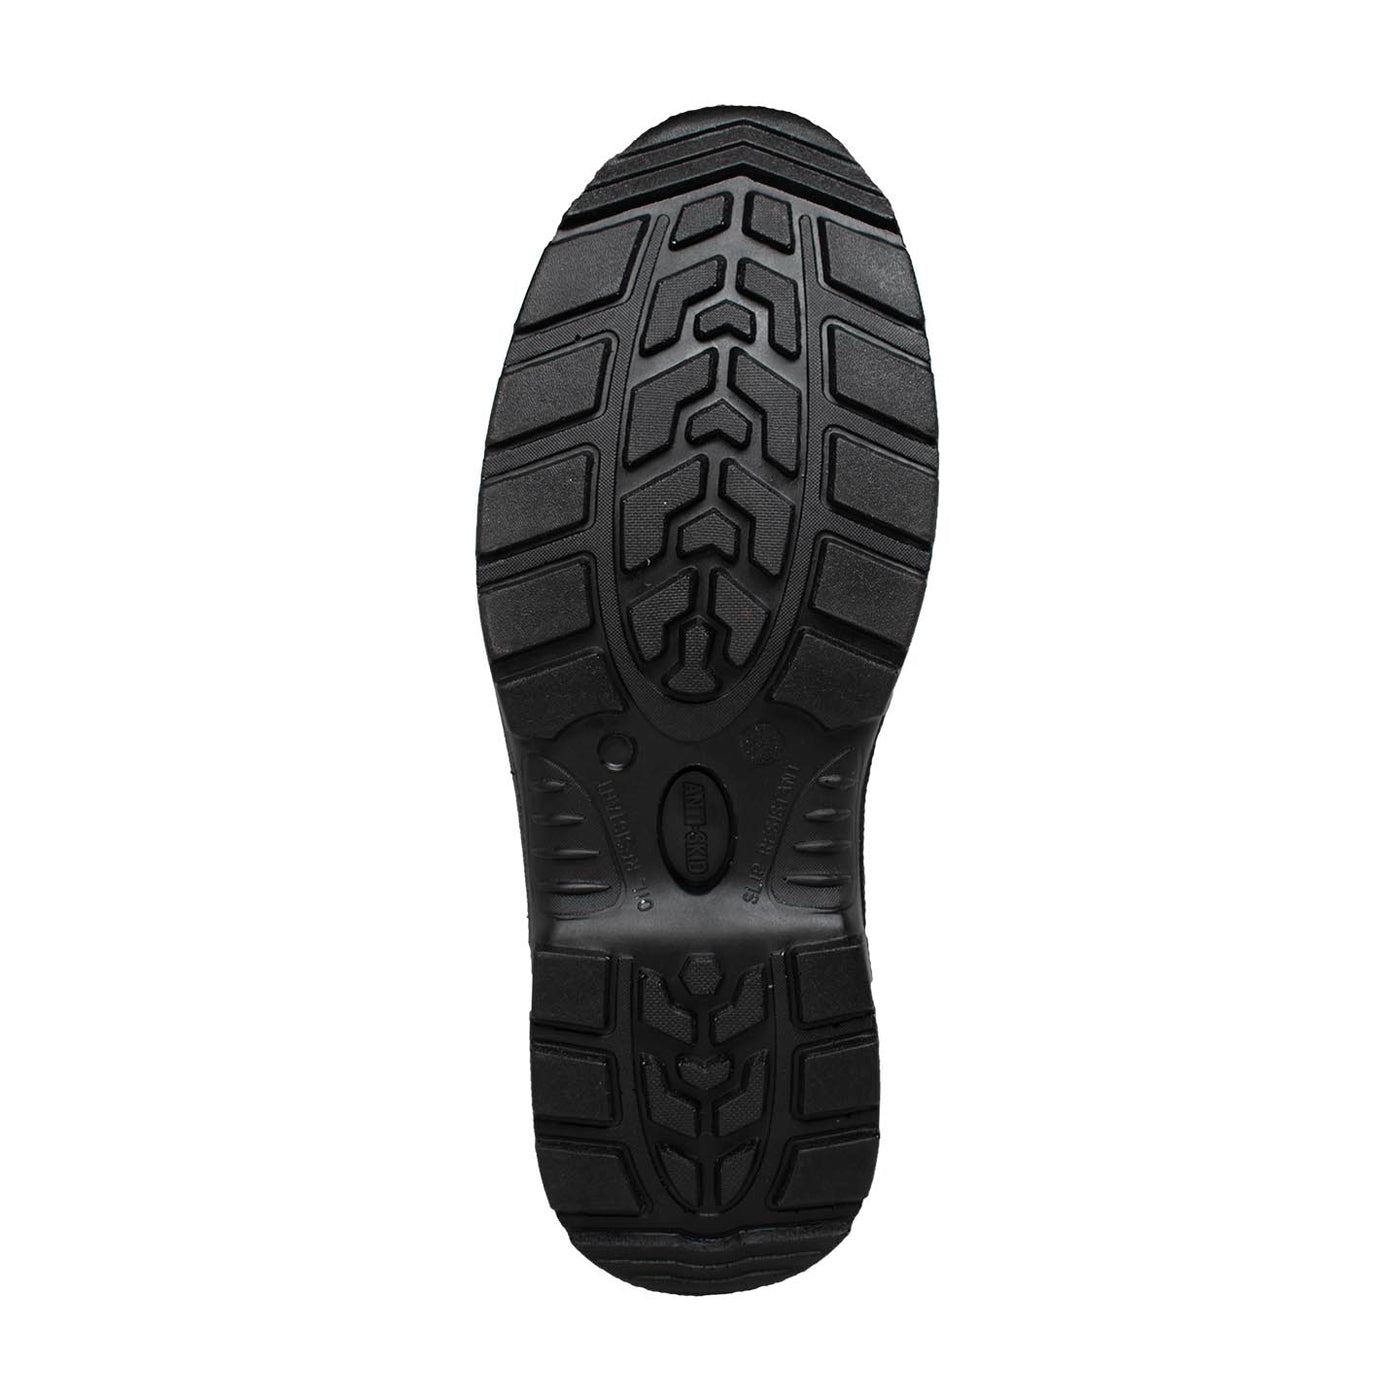 Men's 6" Brown Steel Toe Work Boots - 9895 - Shop Genuine Leather men & women's boots online | AdTecFootWear